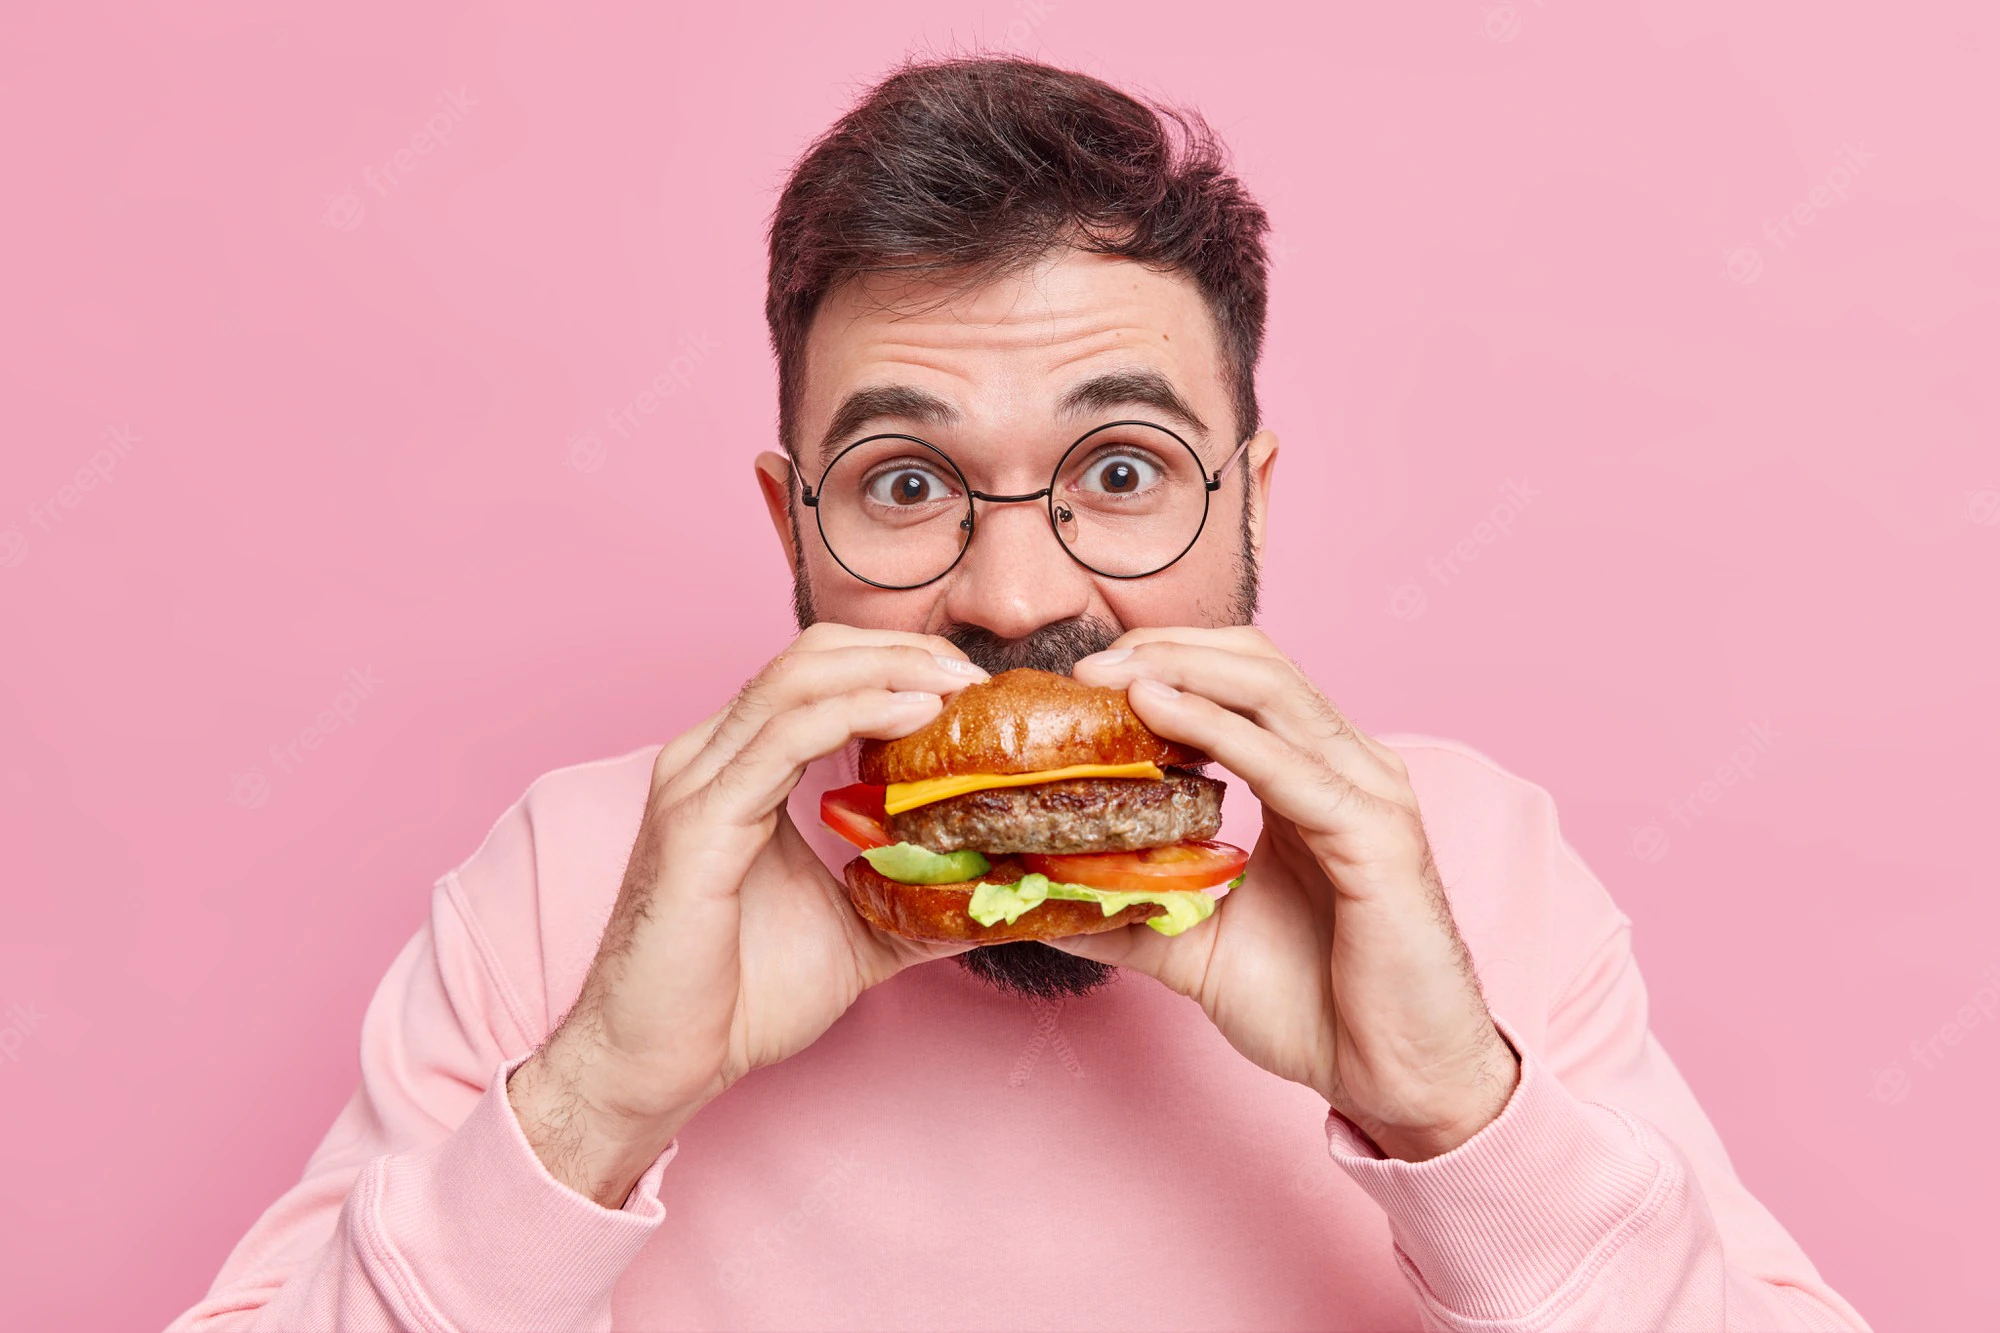 man-eating-burger-affecting-oral-health